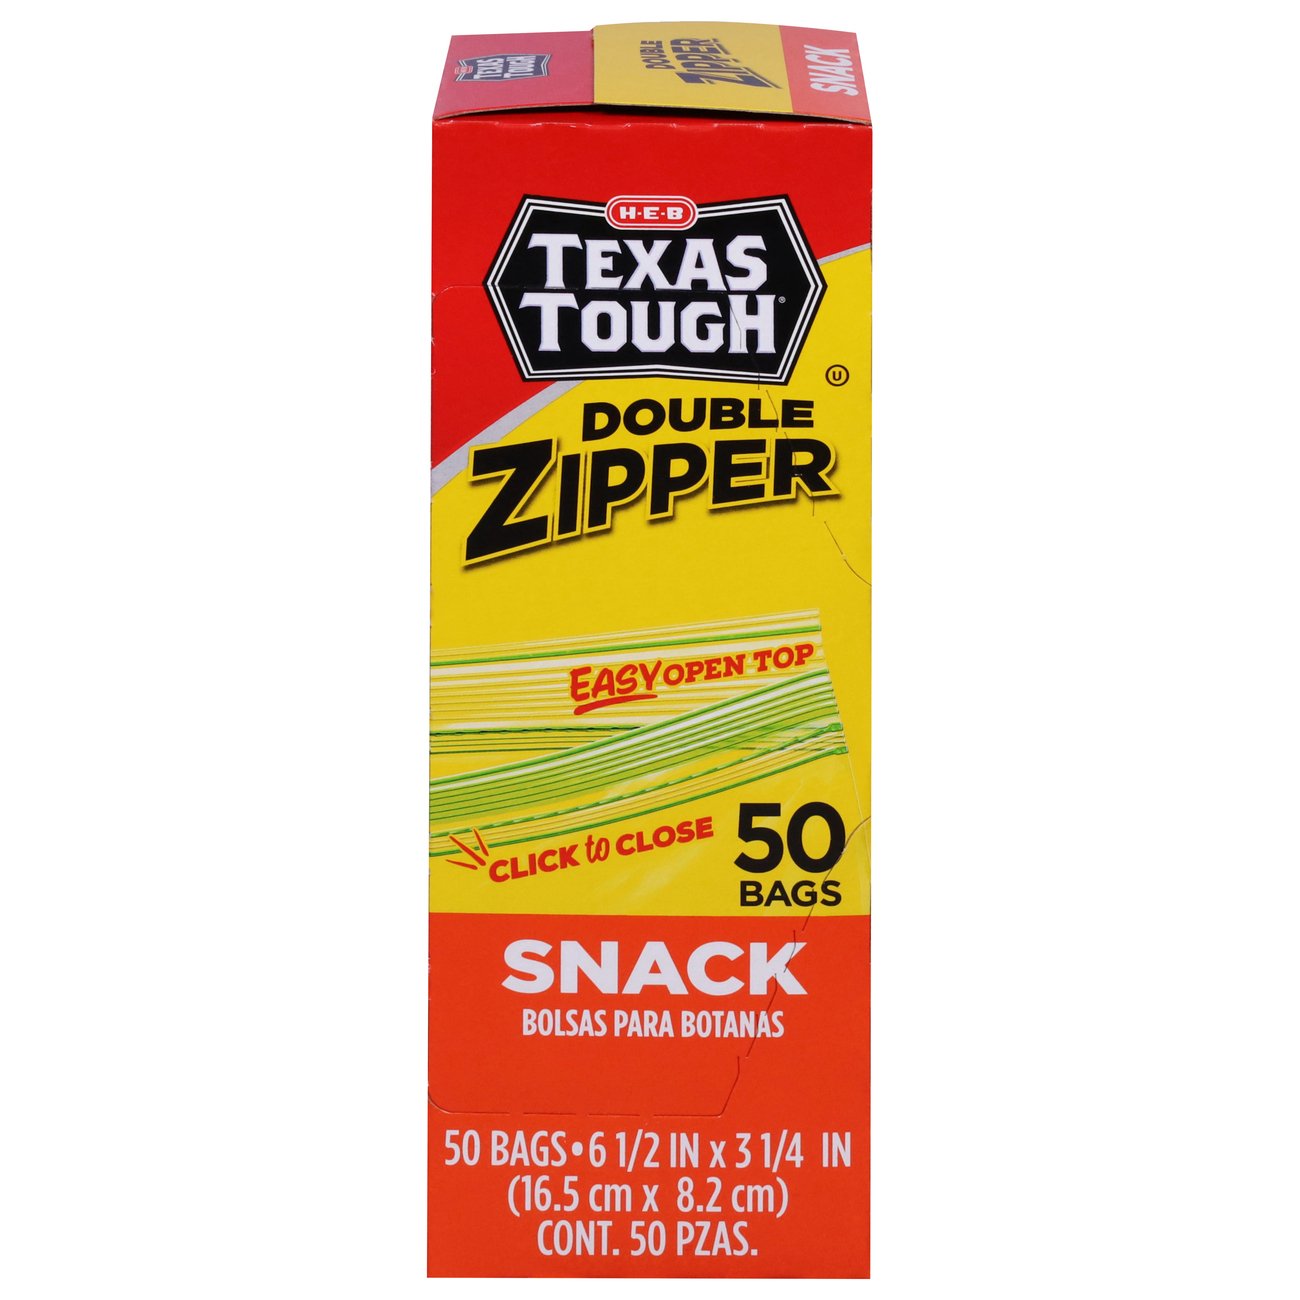 H-E-B Texas Tough Double Zipper Snack Bags - Shop Storage Bags at H-E-B